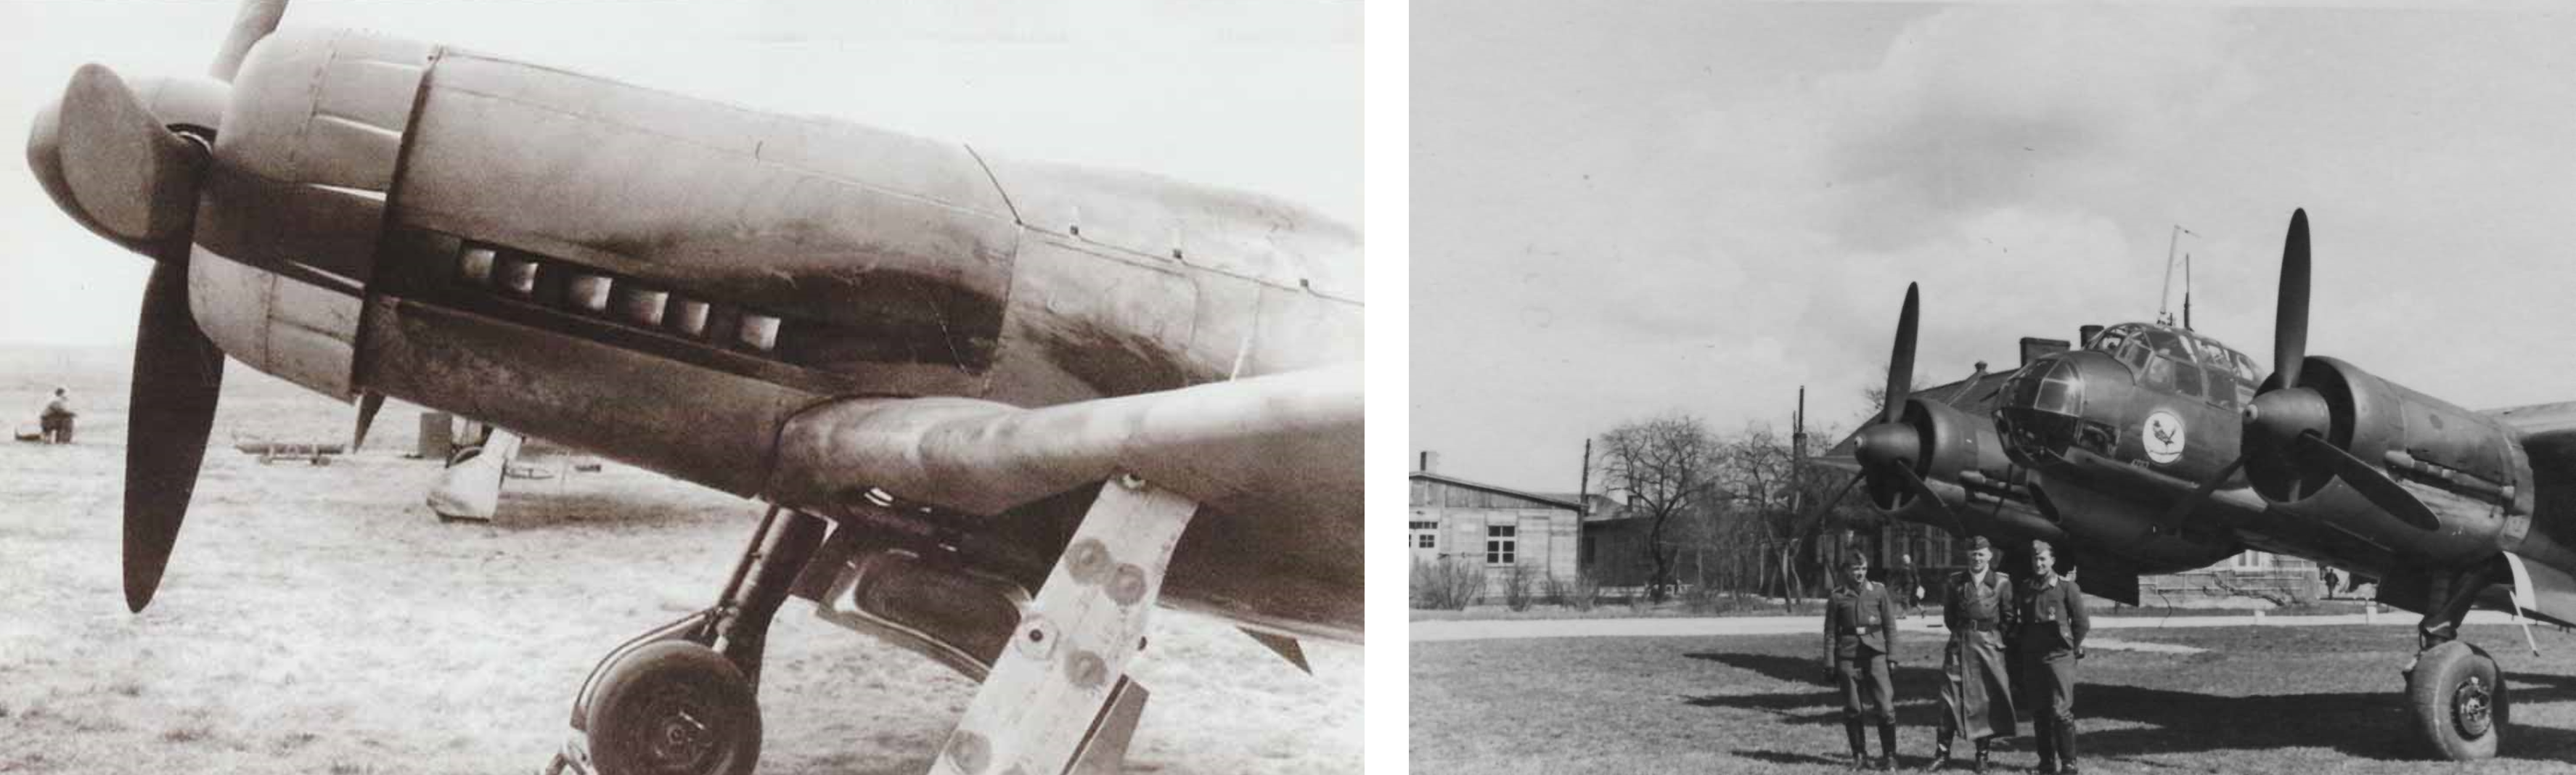 Comparison between the engine unit of the Focke-Wulf V29/U1 and a Junkers Ju 88 A belonged to II.KG3.